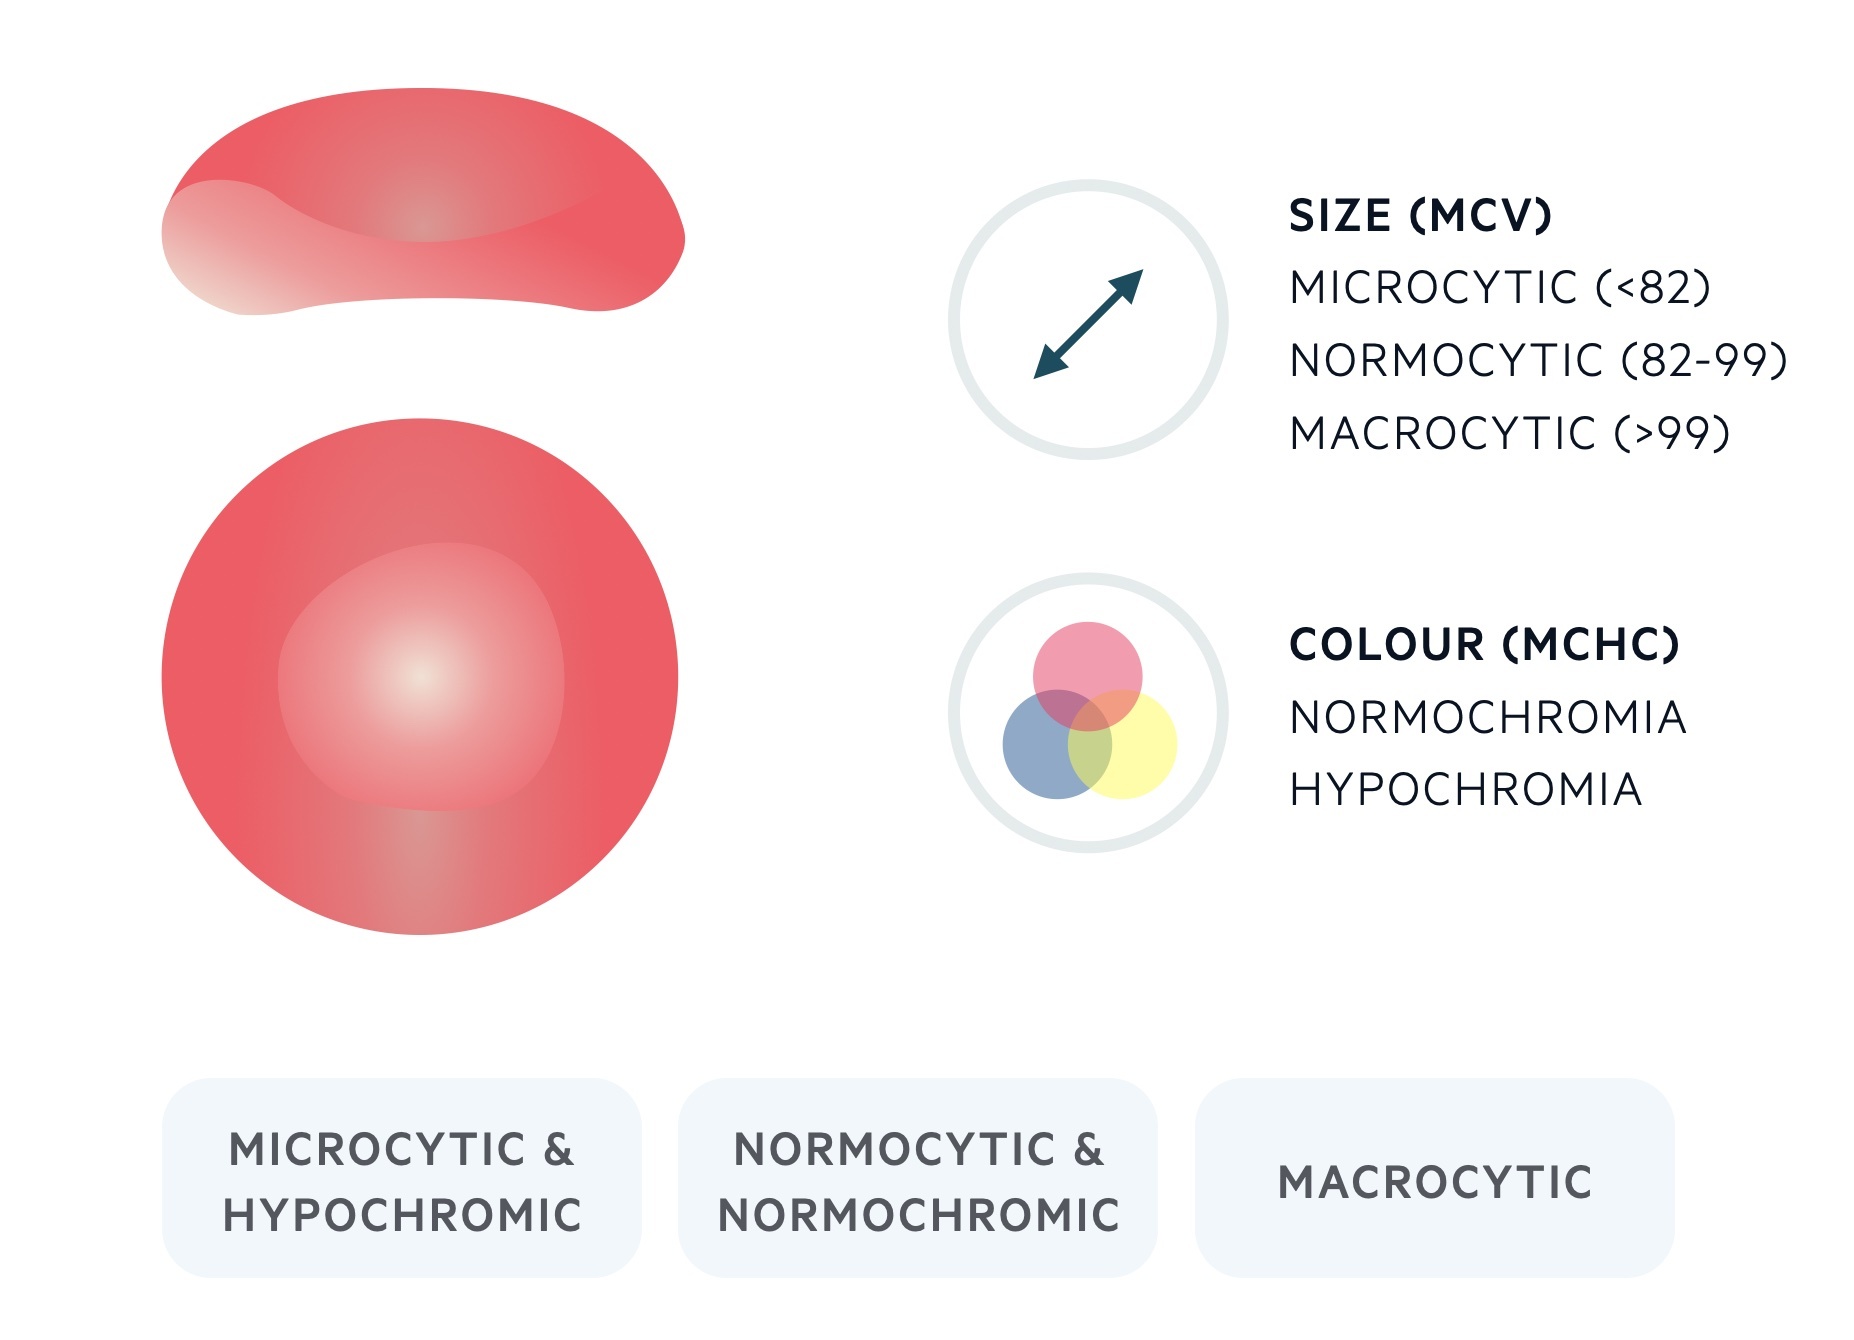 Morphological classification of anaemia